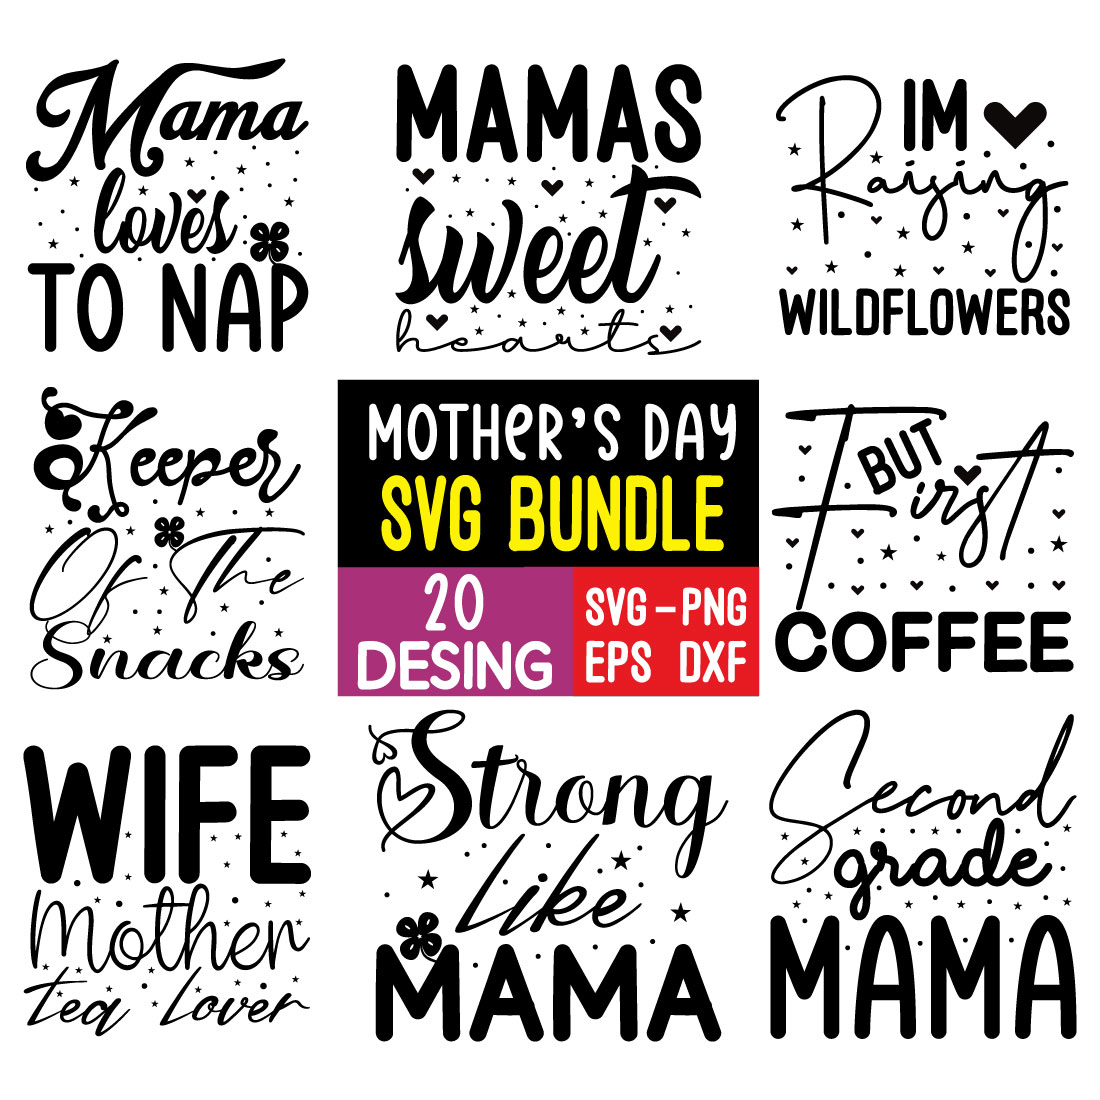 Mother Day Svg Bundle cover image.